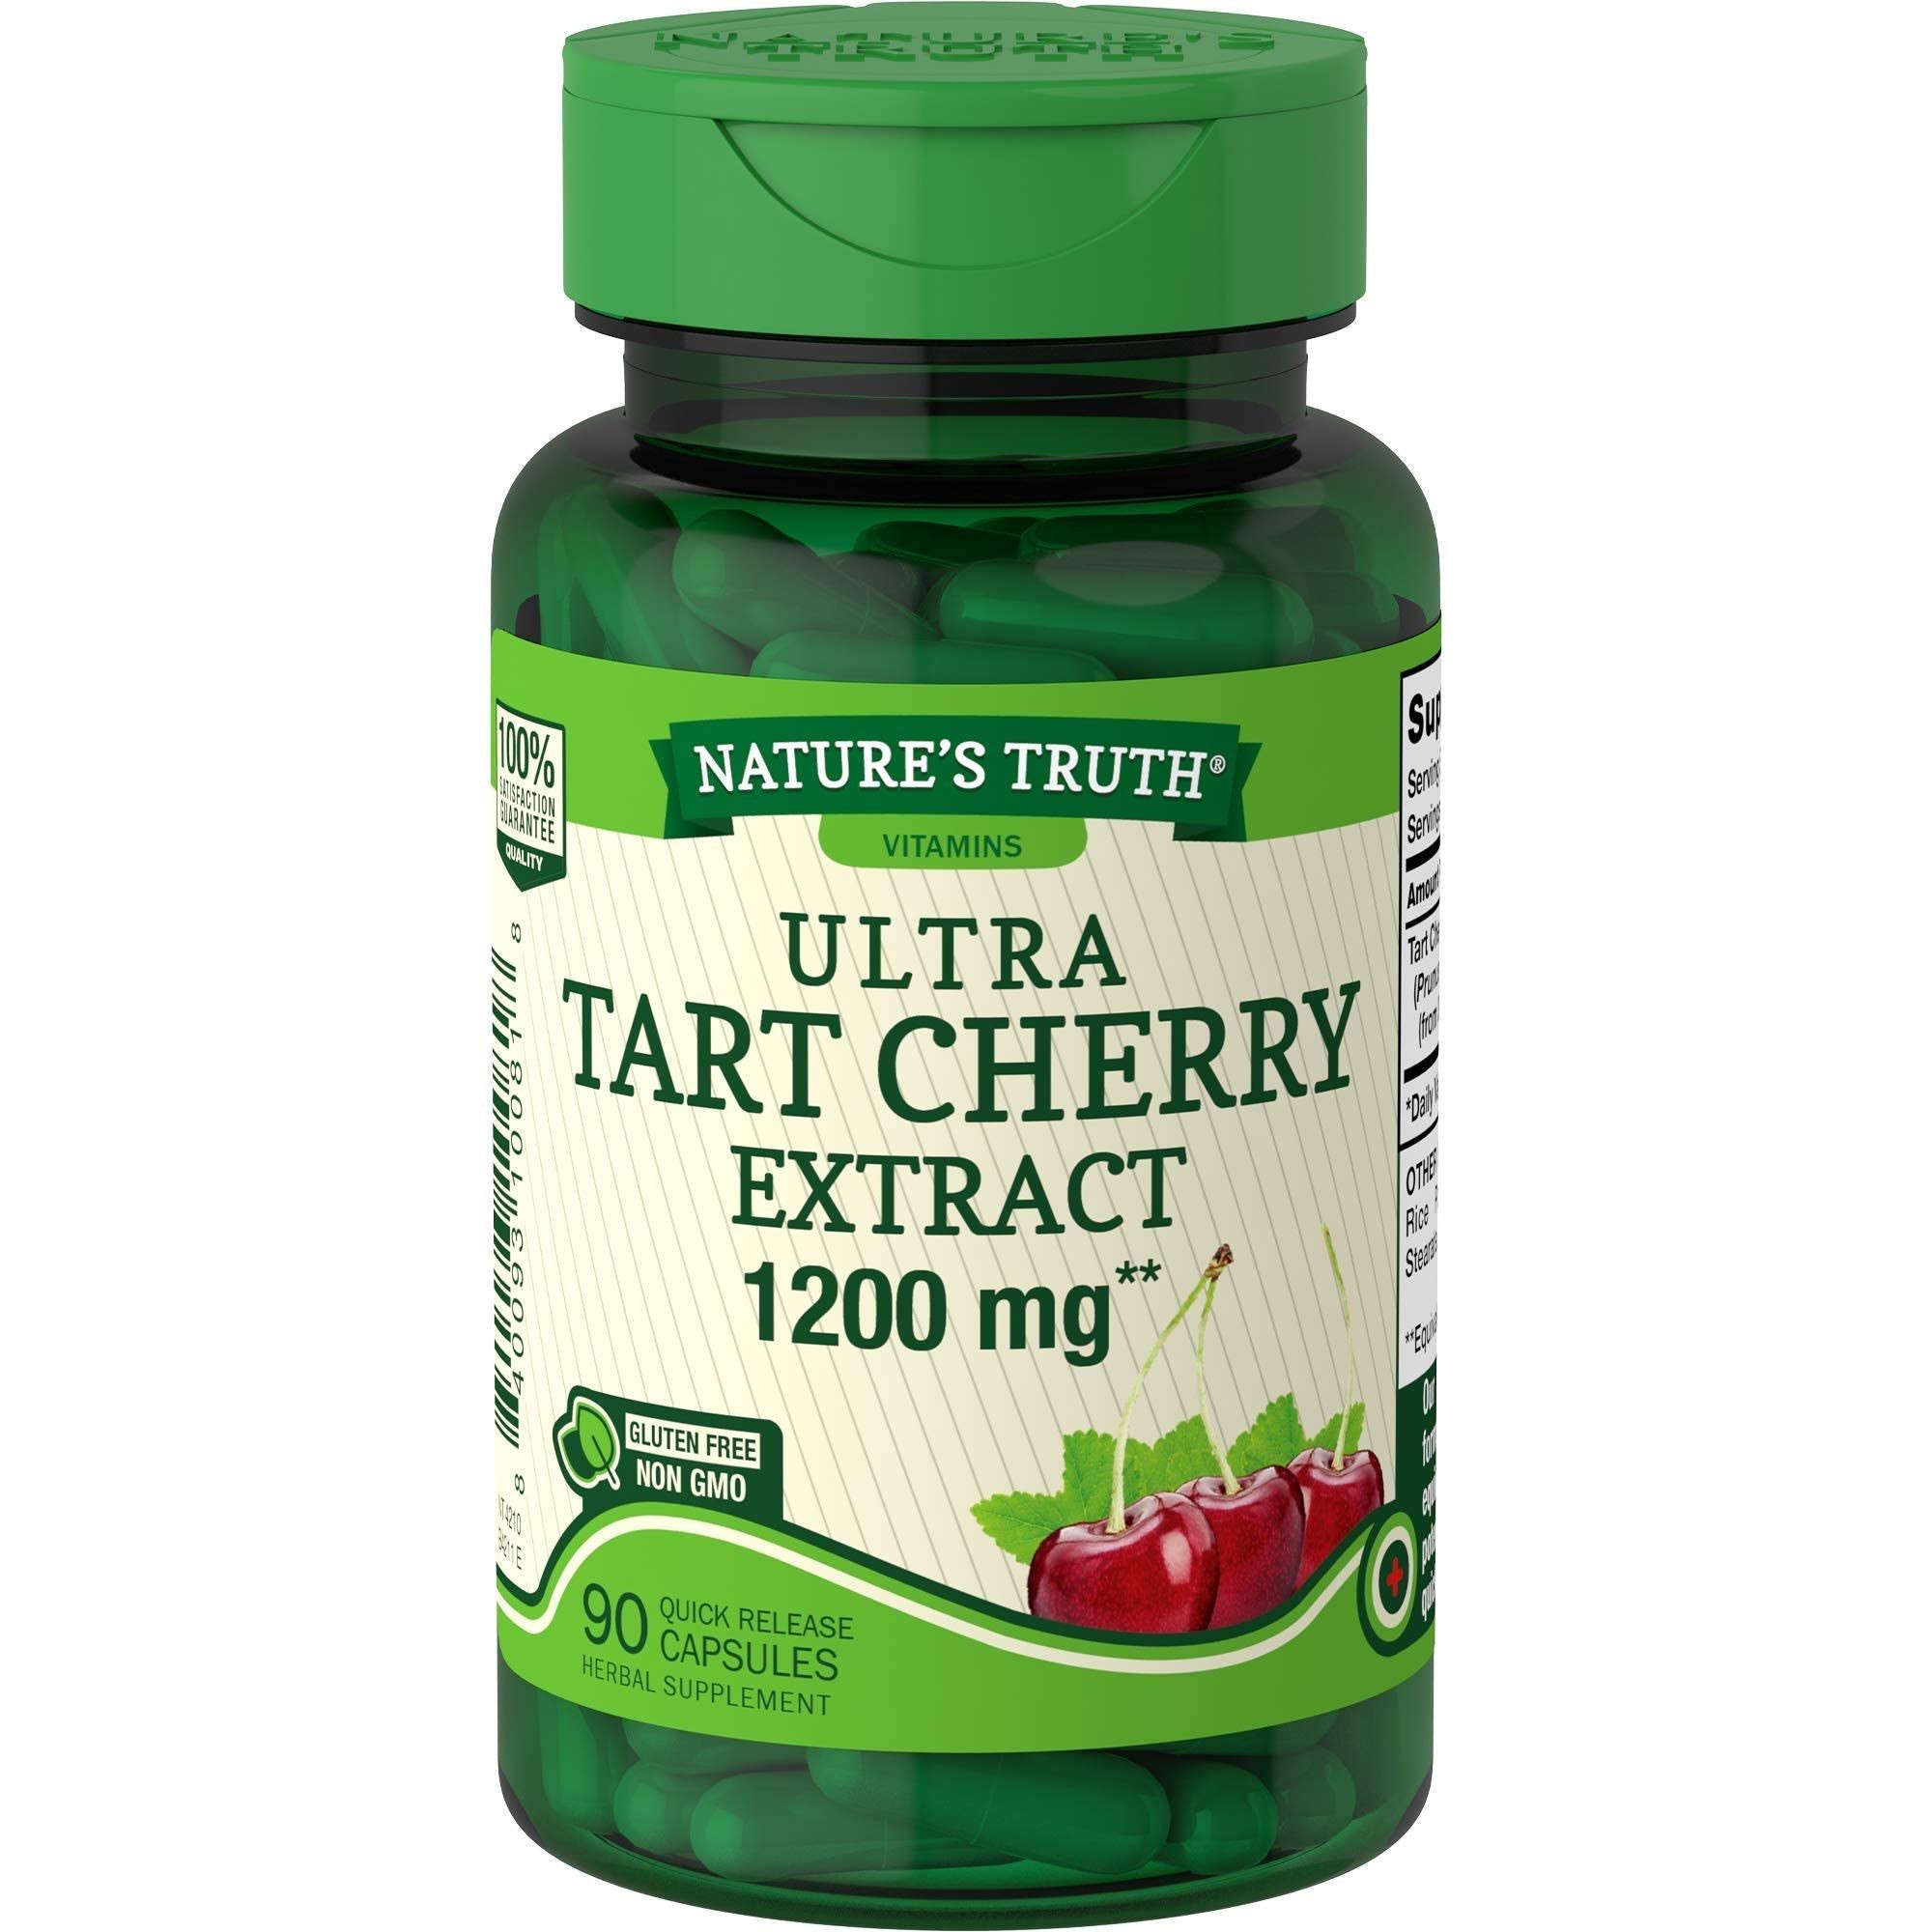 Nature's Truth Ultra Tart Cherry Extract Dietary Supplement - 1200mg, 90ct